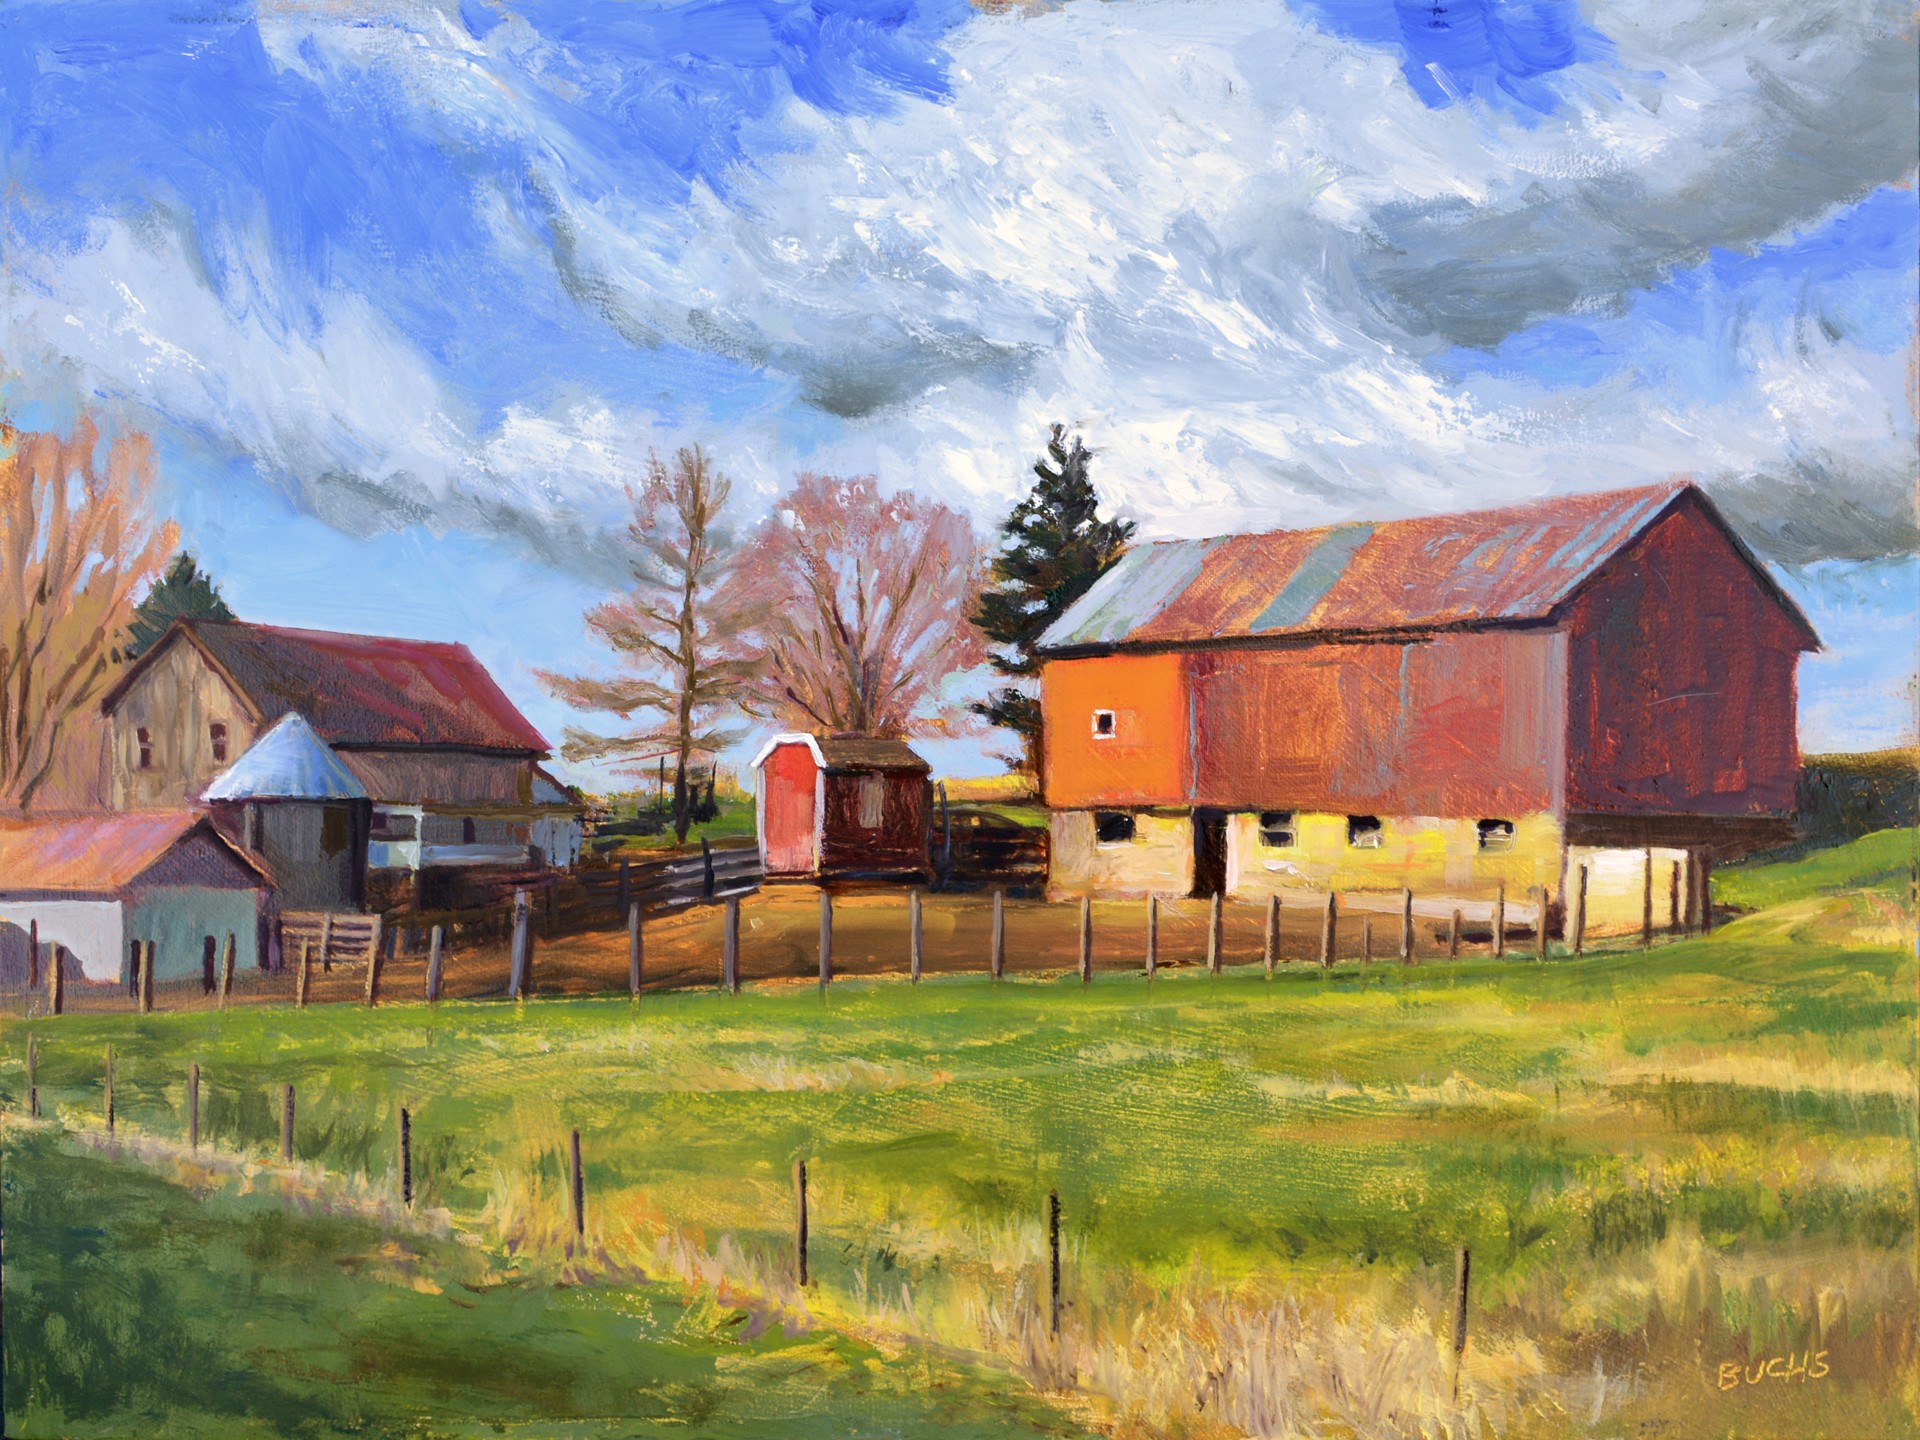 Windswept Farm by Thomas Buchs